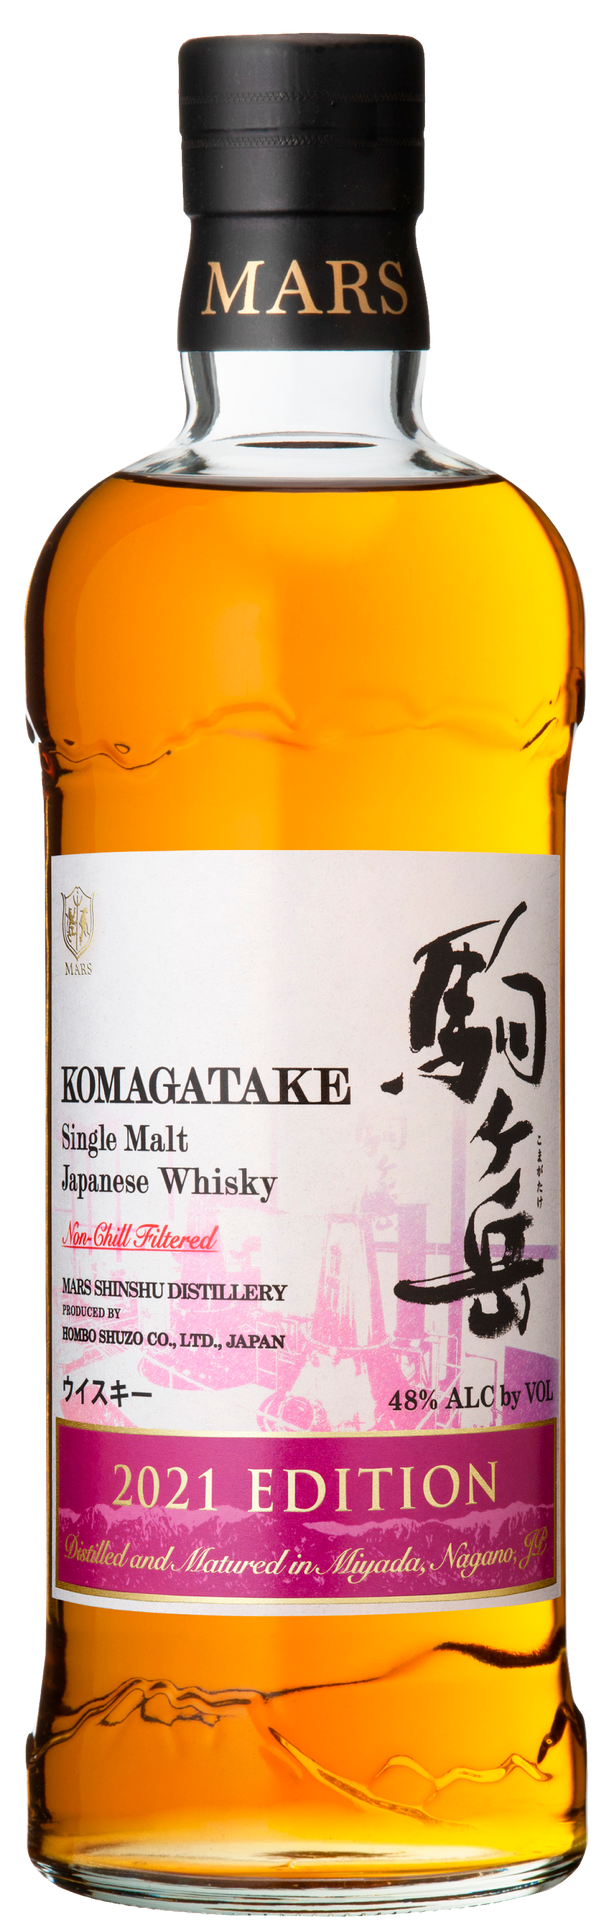 Mars Komagatake Shinshu Distillery 2021 Limited Edition Japanese Single Malt Whisky 700ml